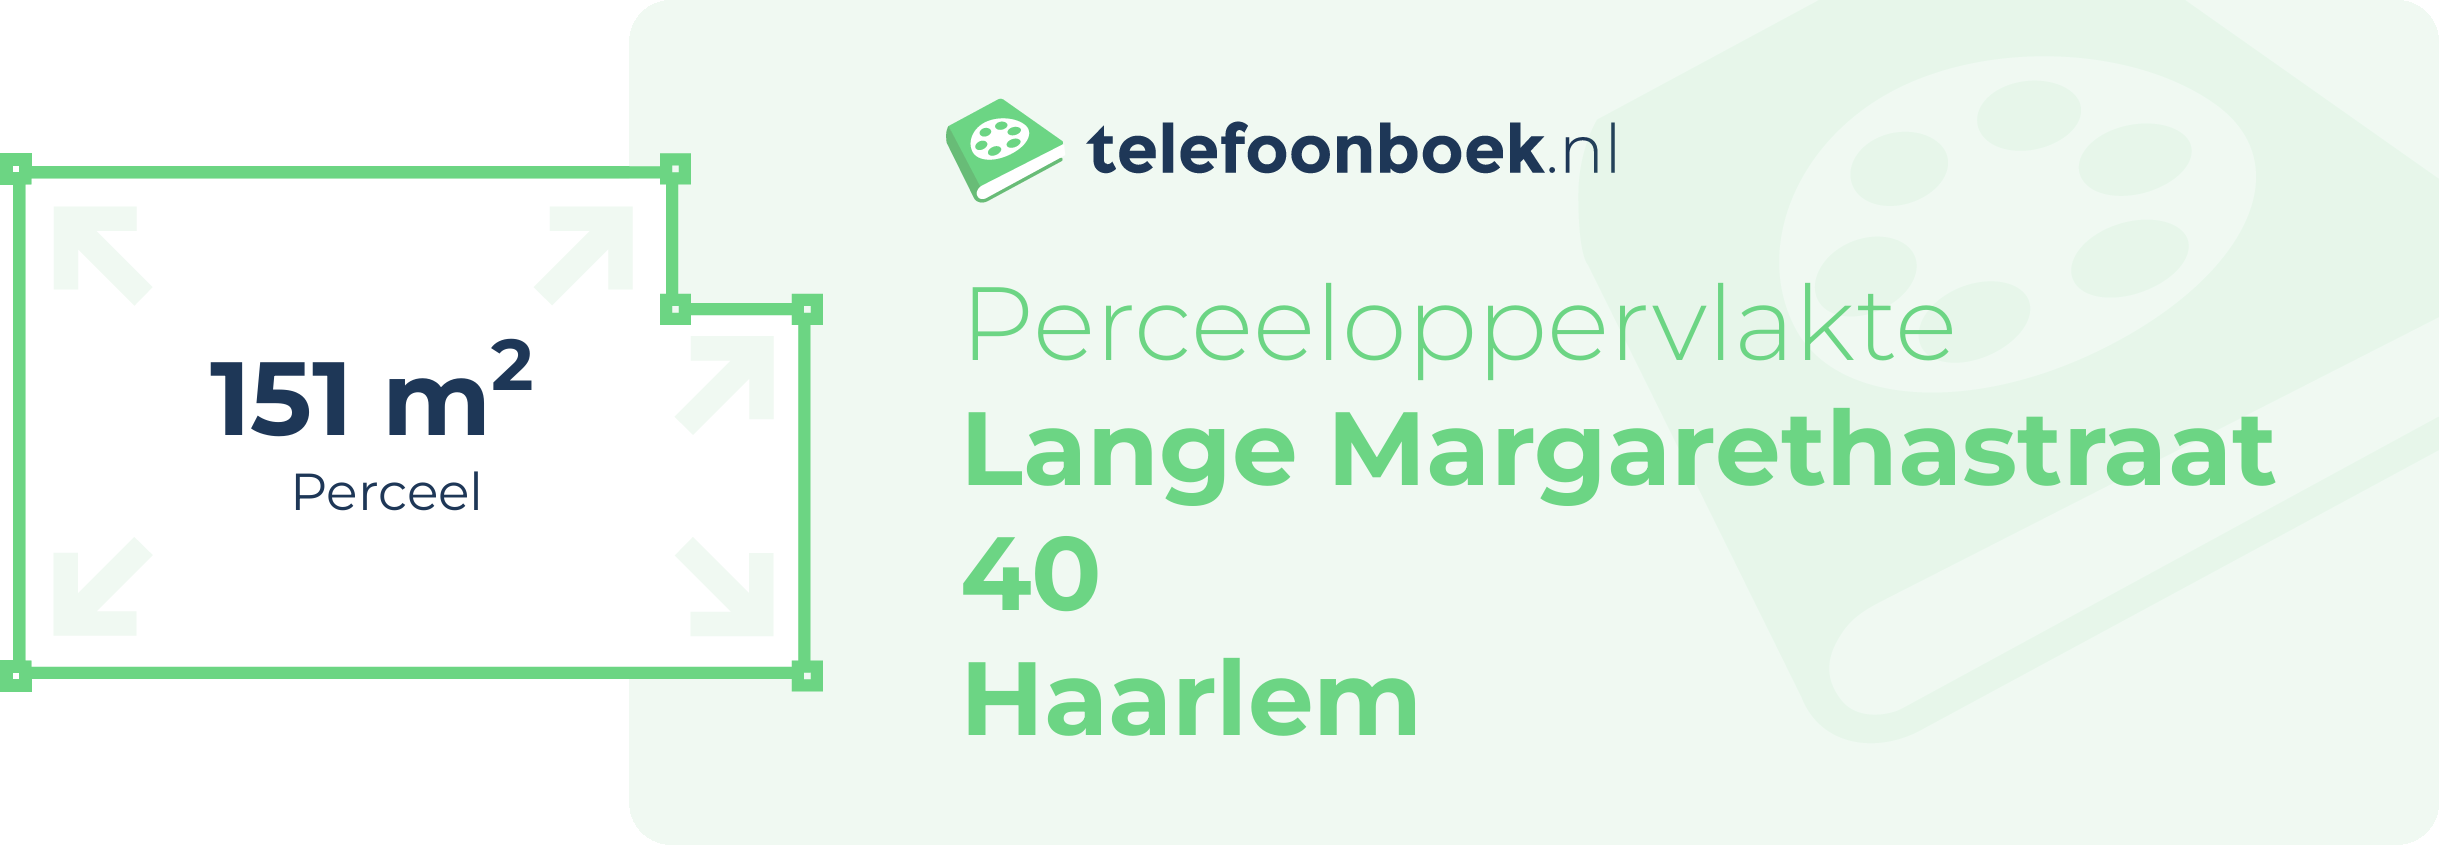 Perceeloppervlakte Lange Margarethastraat 40 Haarlem